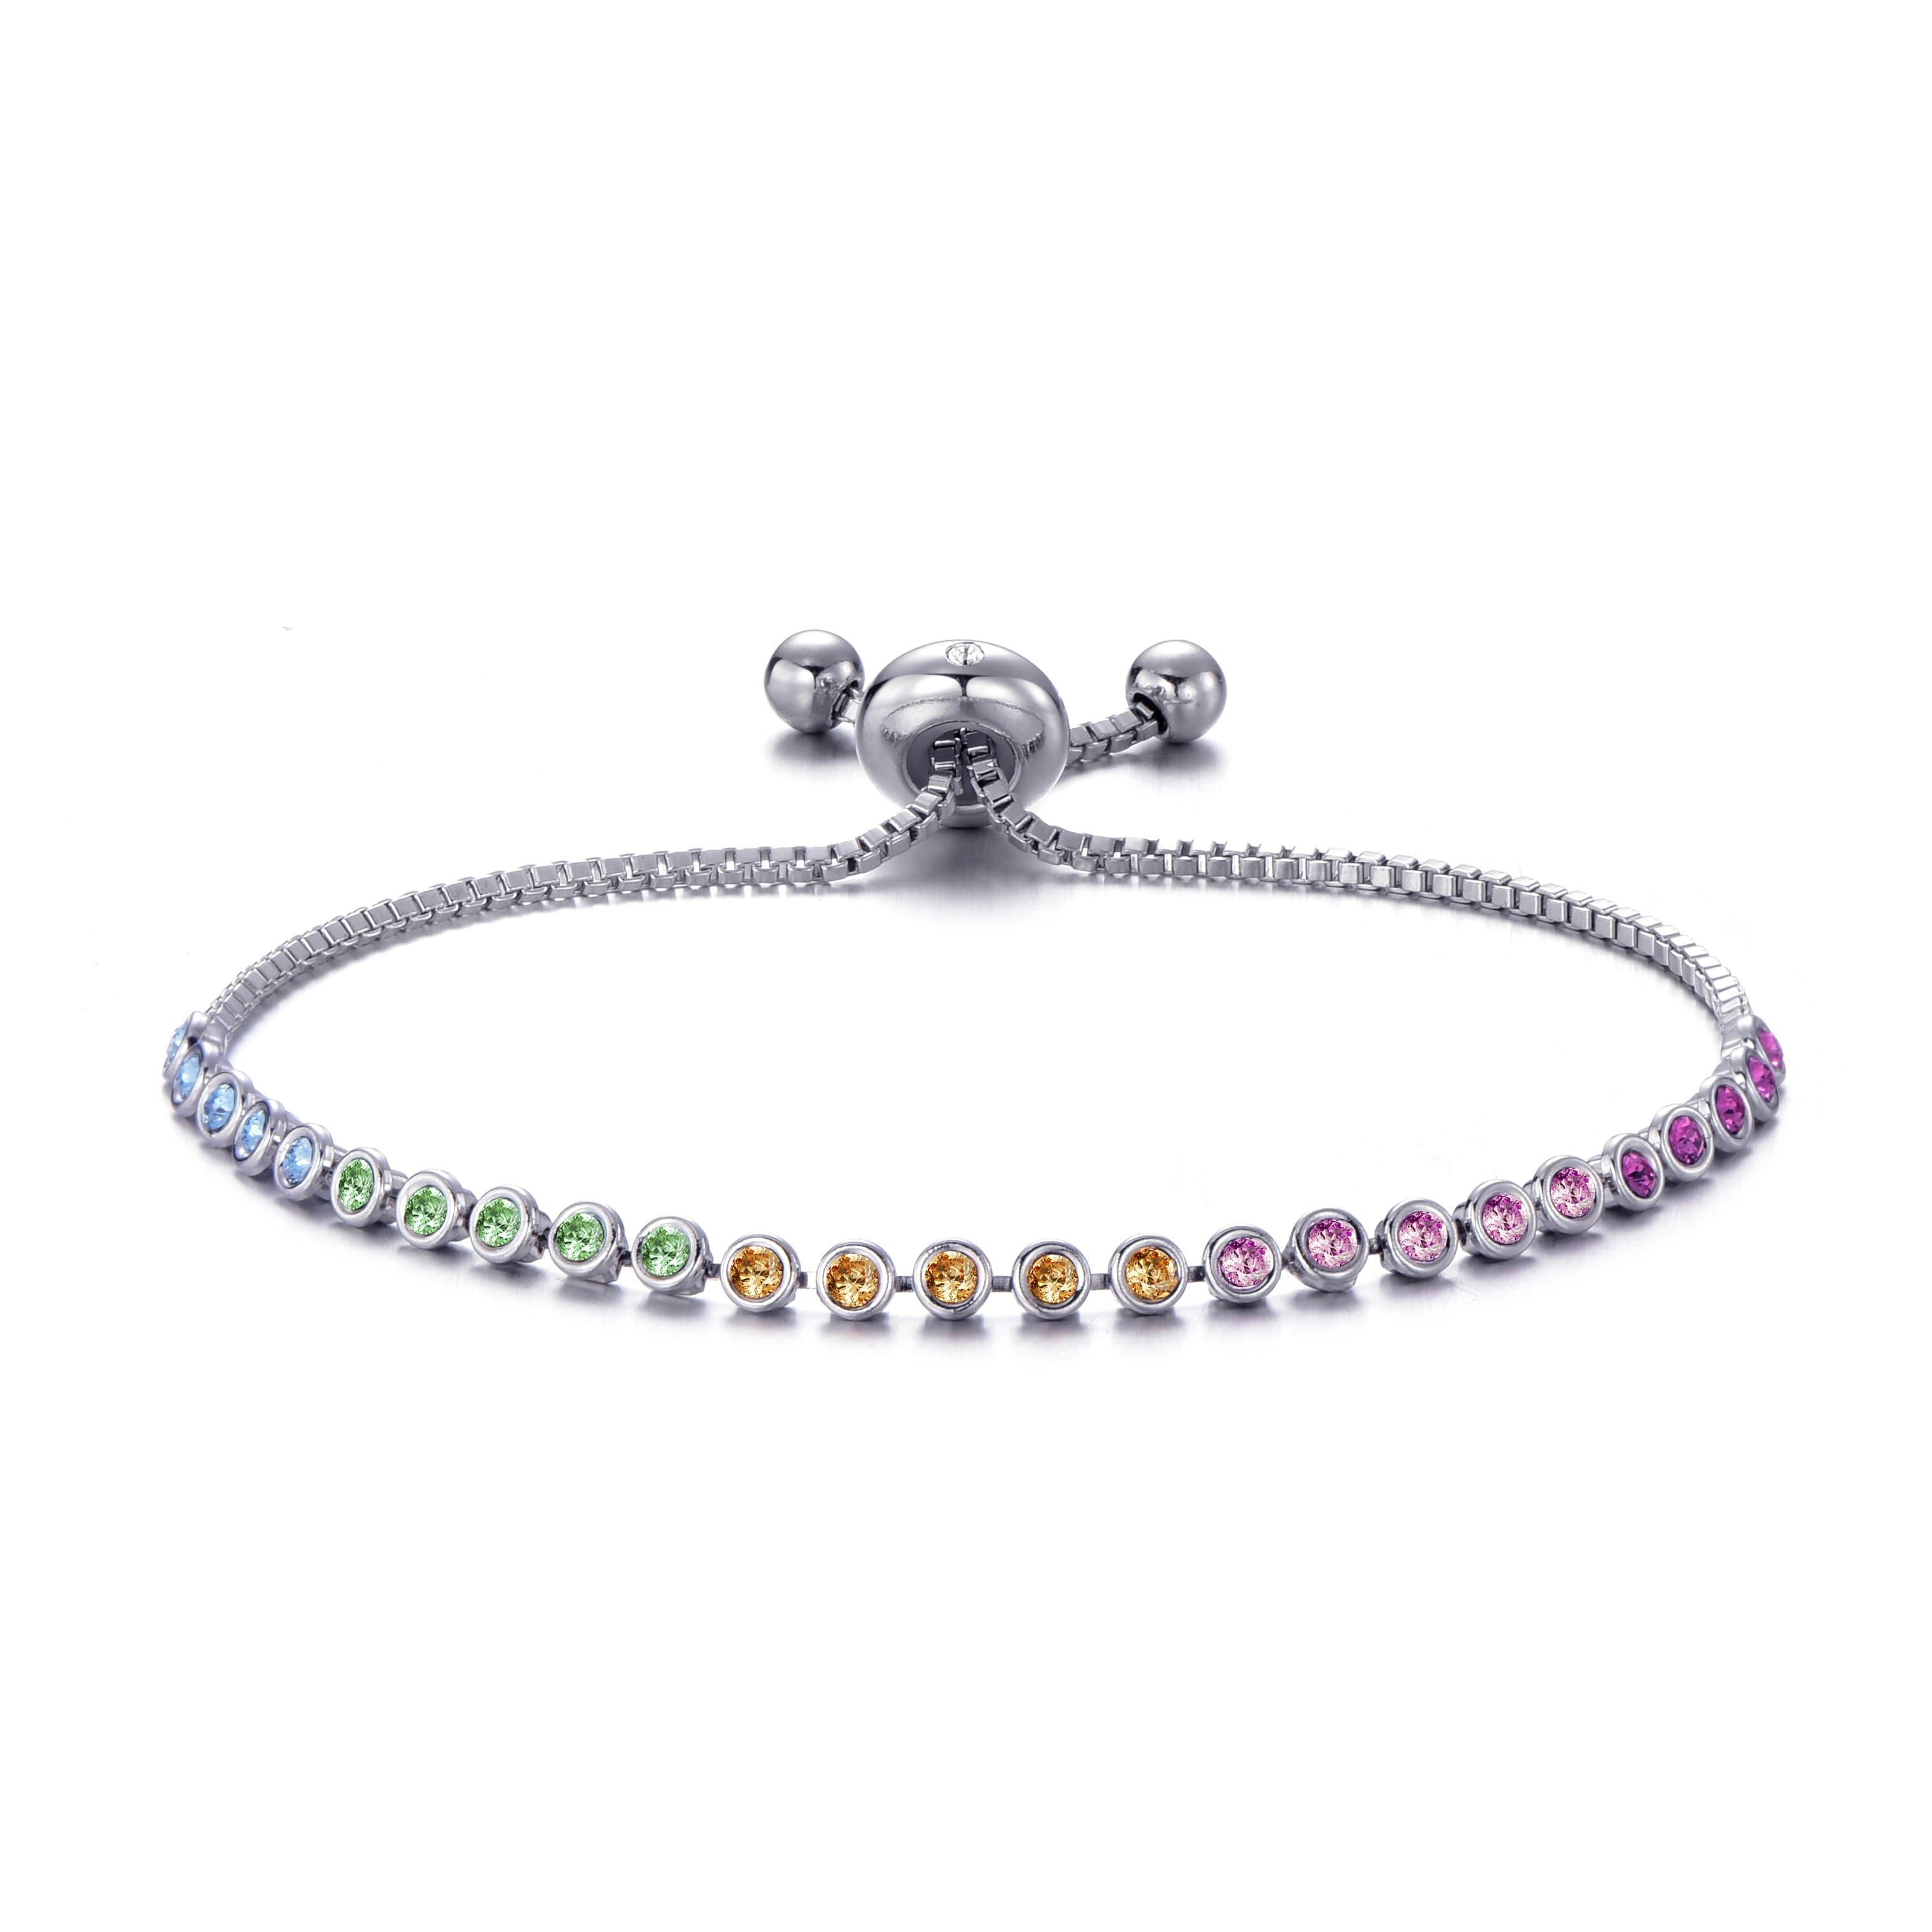 Rainbow Friendship Bracelet with Zircondia® Crystals by Philip Jones Jewellery